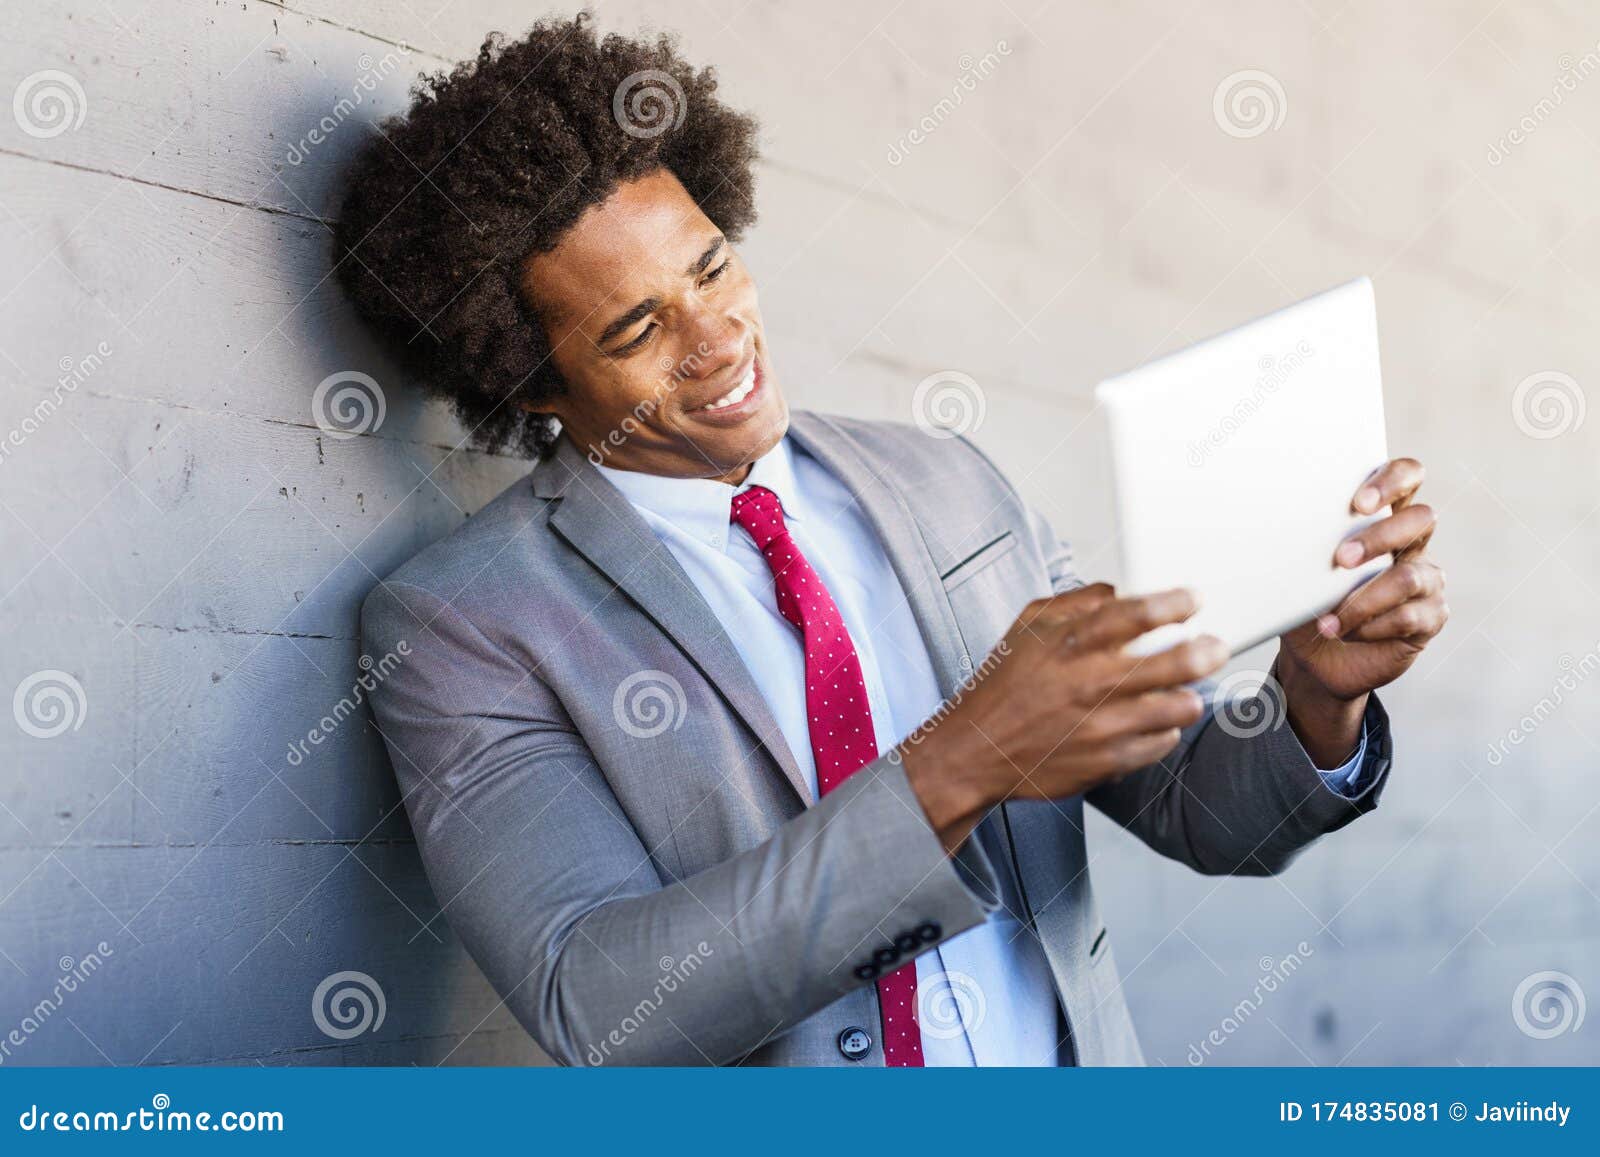 black businessman using a digital tablet in urban background